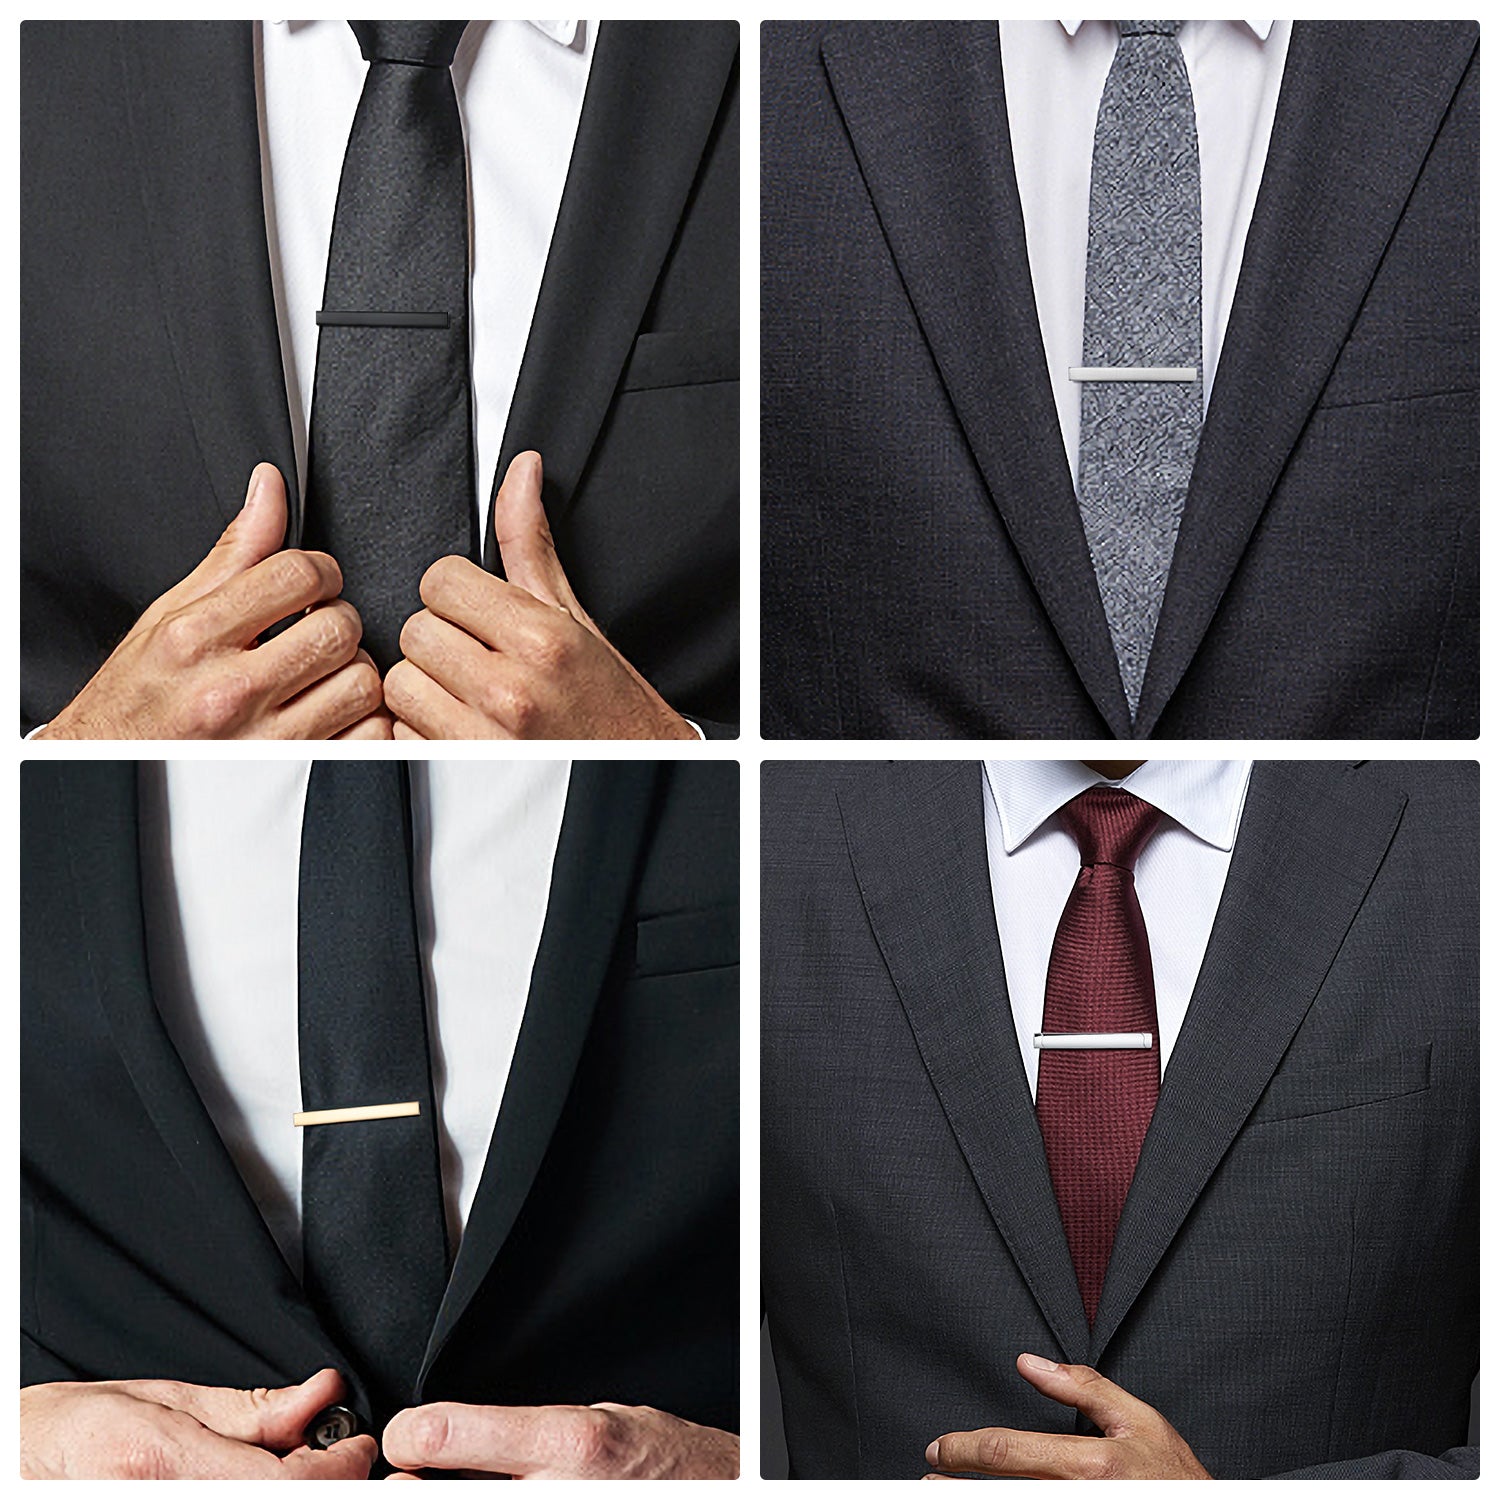 Viaky Men's Classic Style Tie Clips